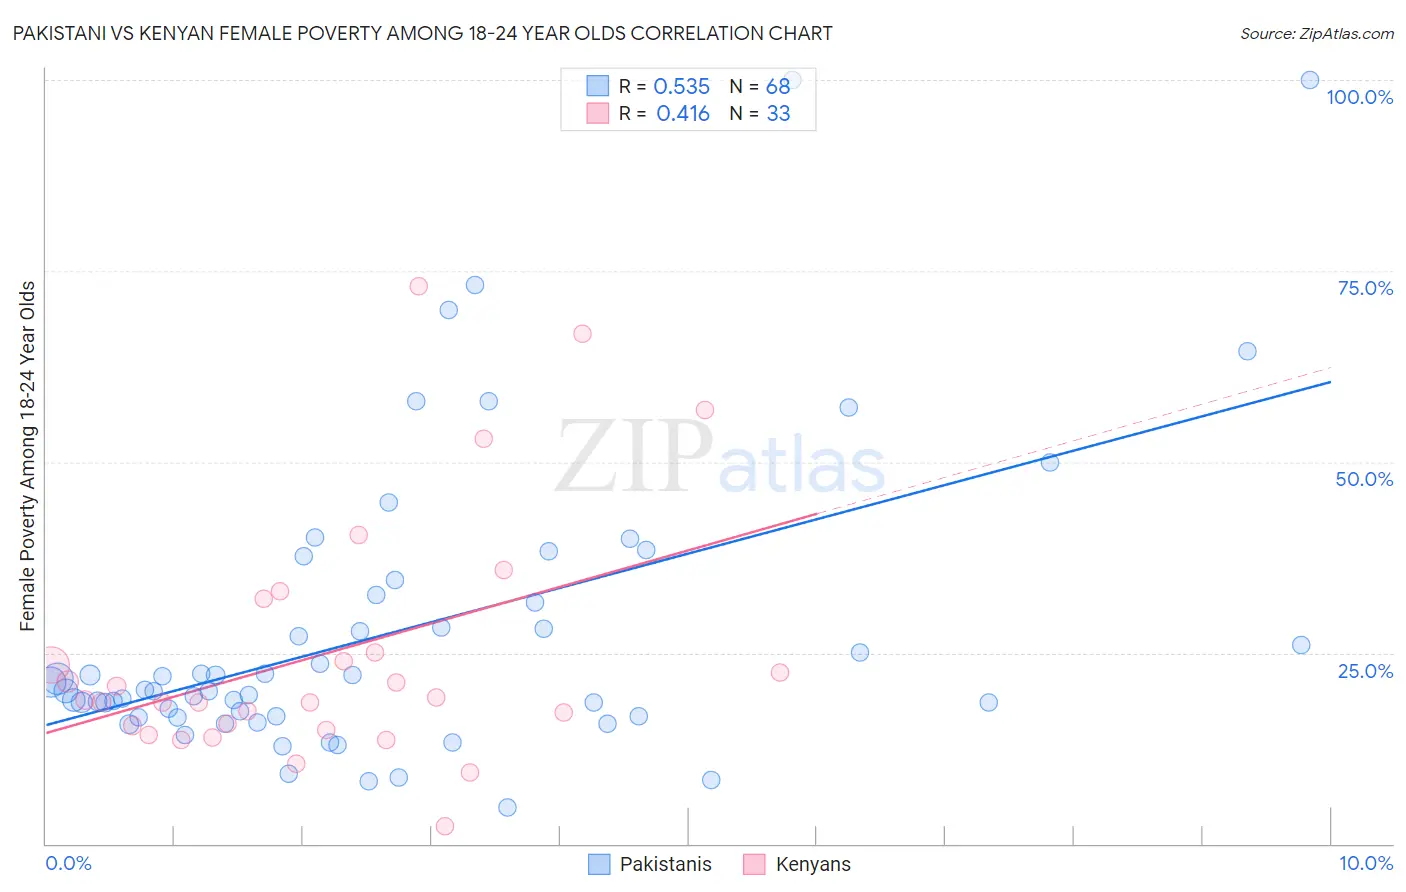 Pakistani vs Kenyan Female Poverty Among 18-24 Year Olds